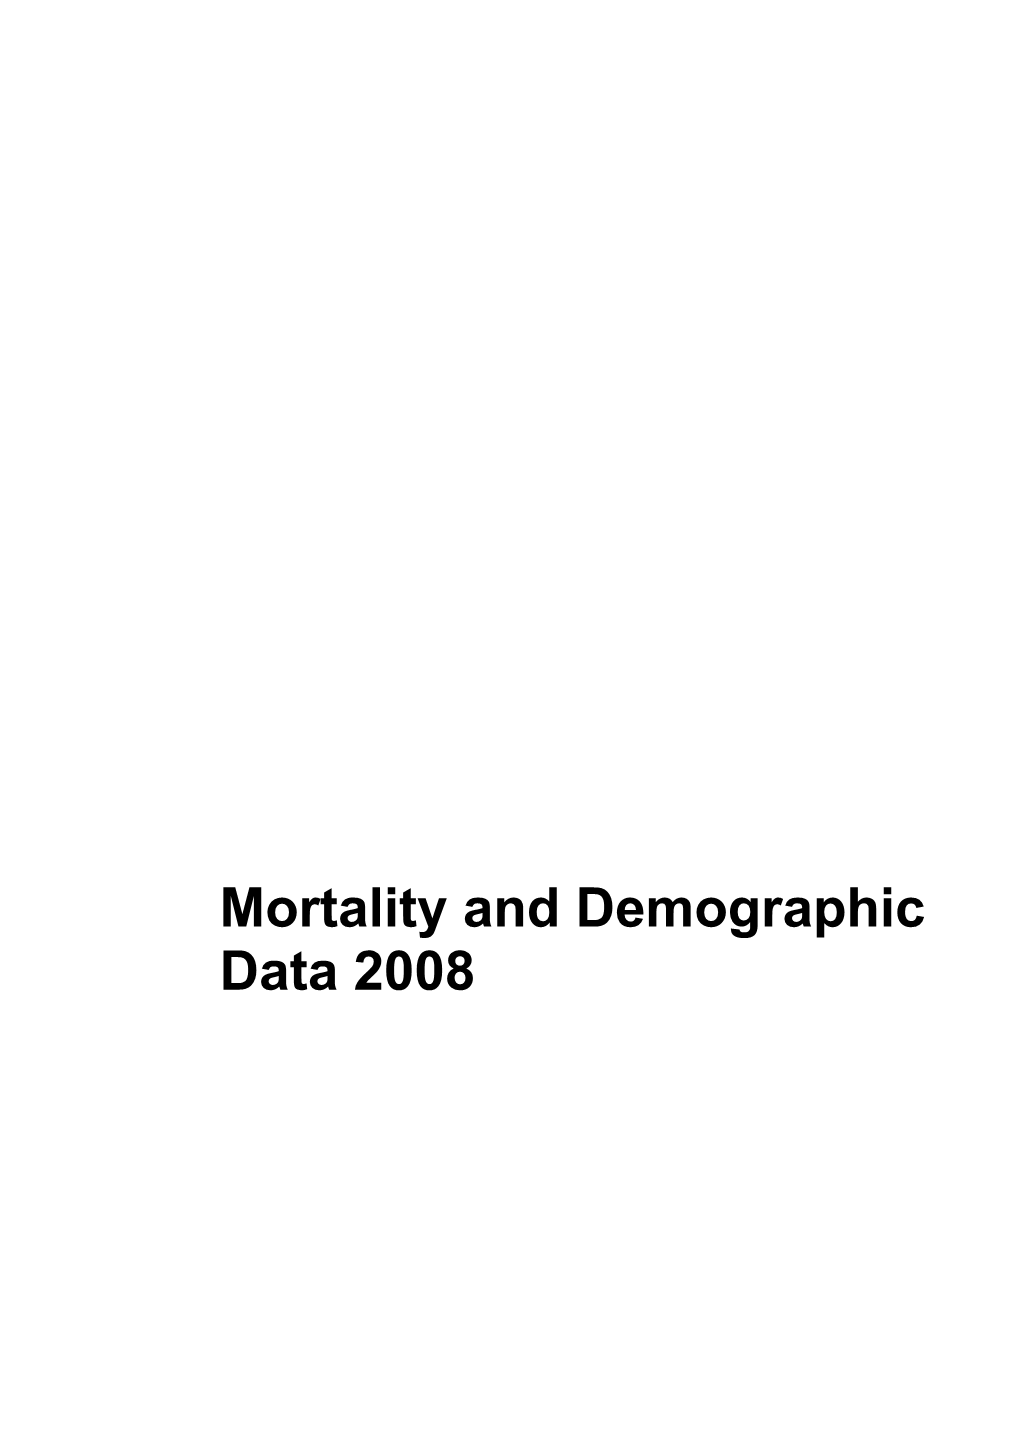 Mortality and Demographic Data 2008